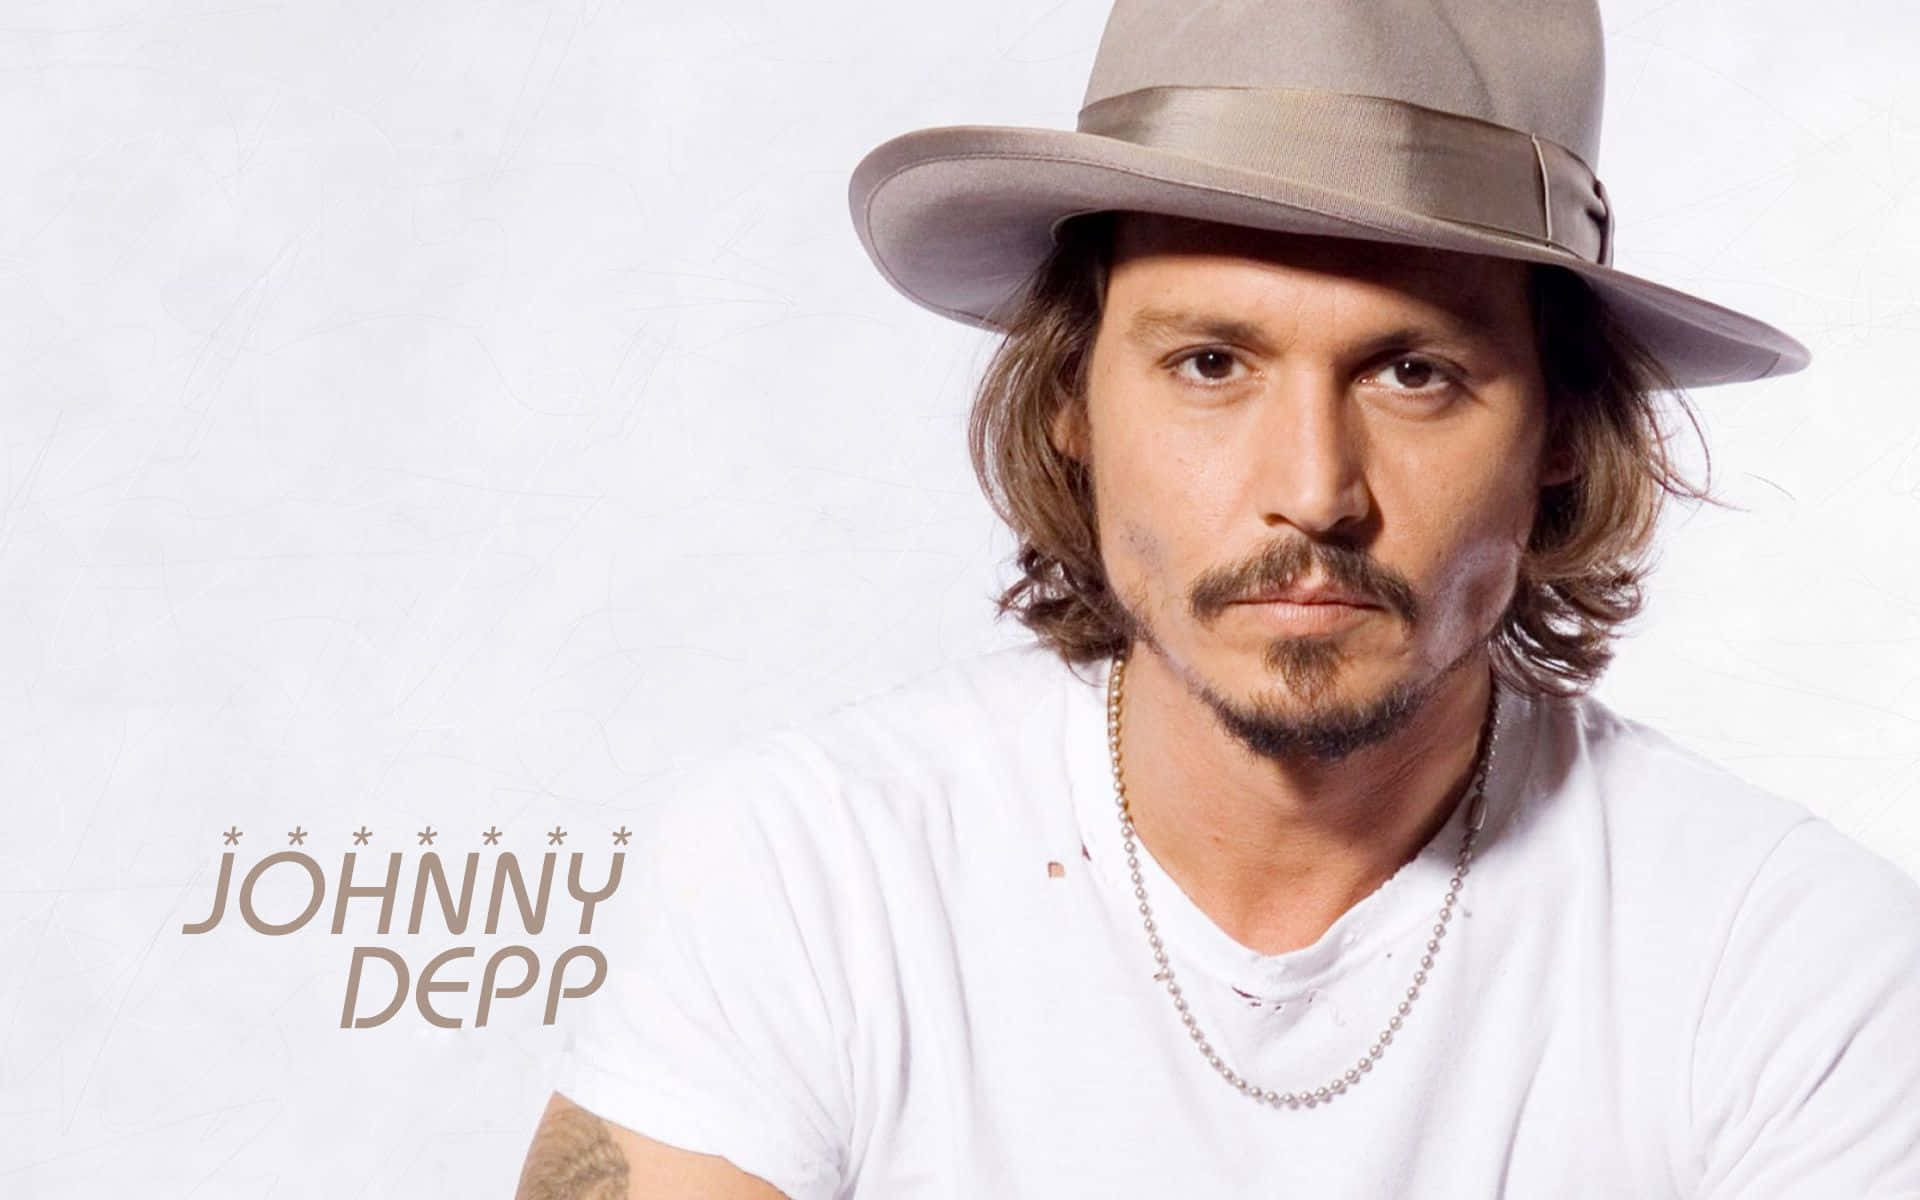 Academy Award-nominated actor Johnny Depp